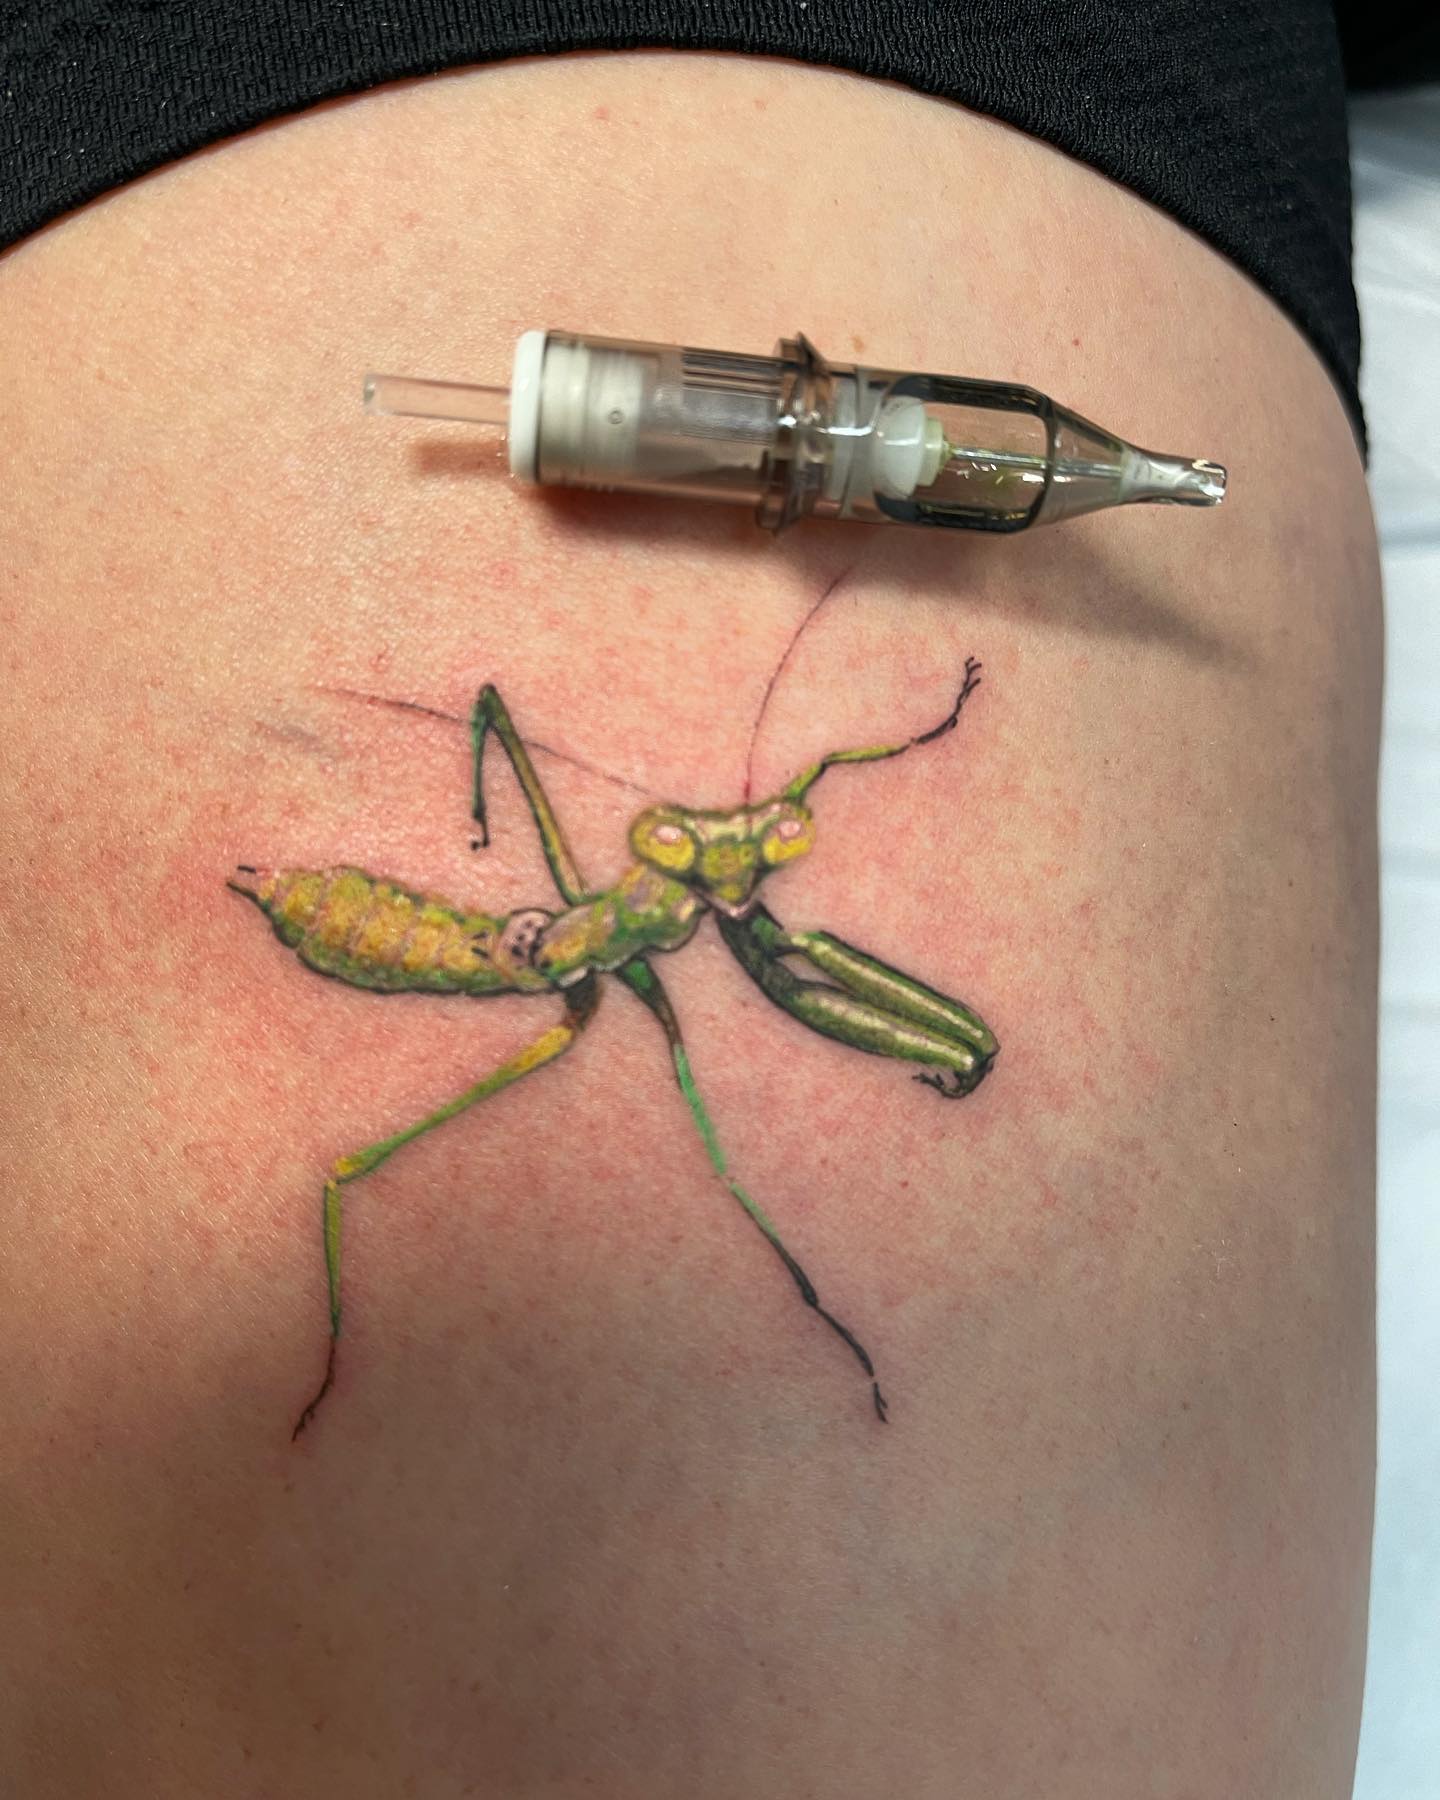 Buy Grasshopper Temporary Fake Tattoo Sticker set of 2 Online in India   Etsy